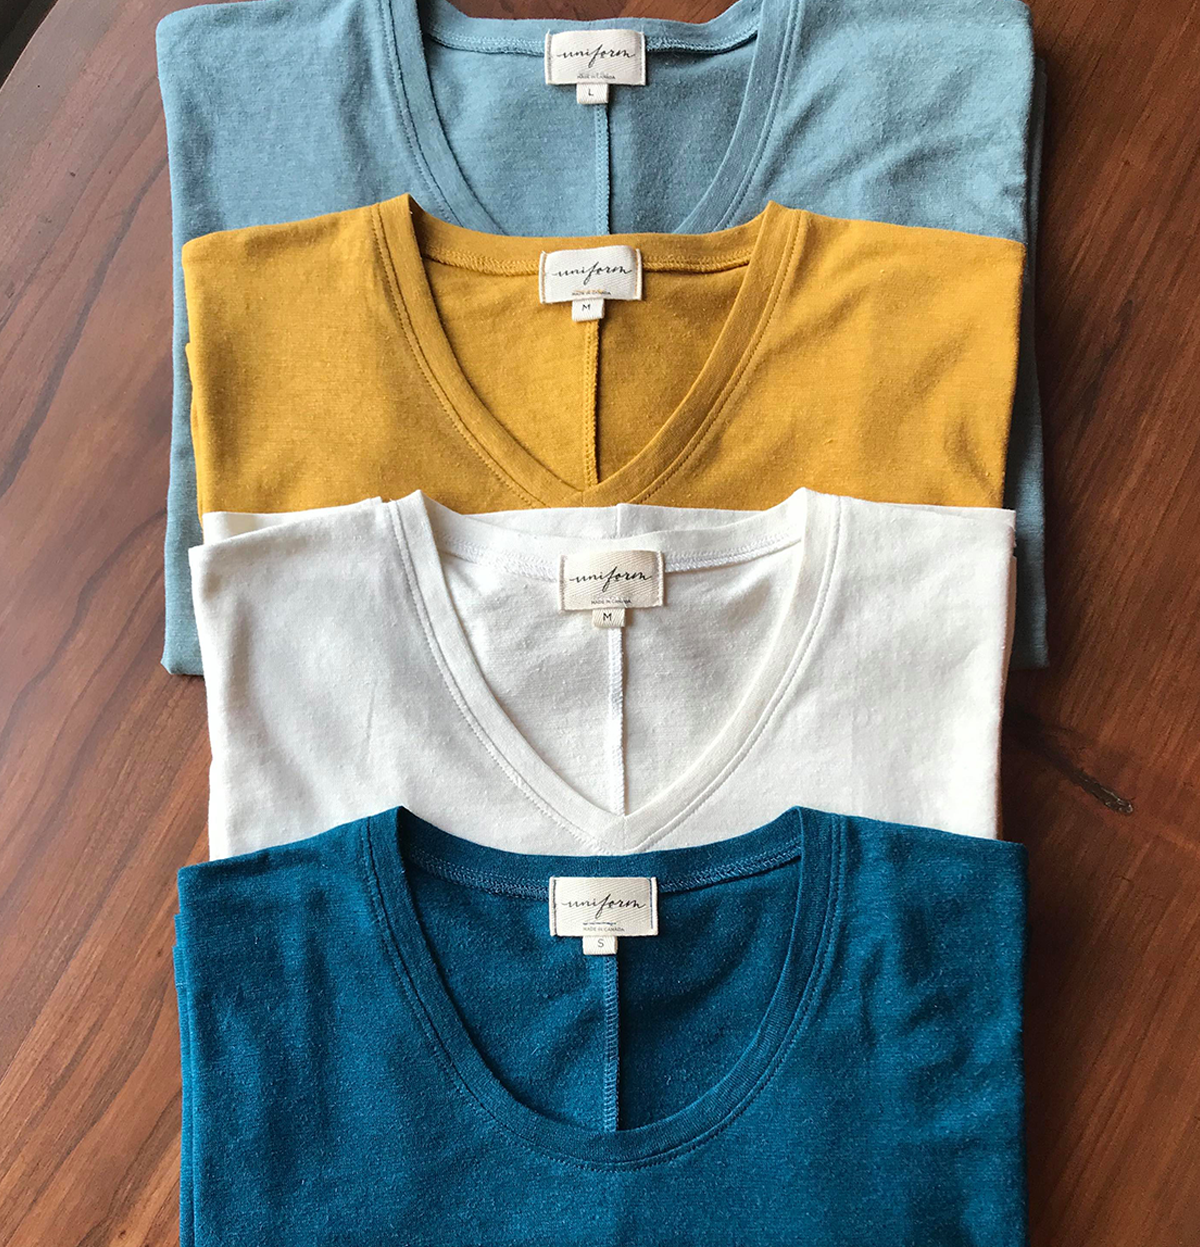 The T Shirt-Scoop Neck-Hemp Organic Cotton Jersey - Regular Length